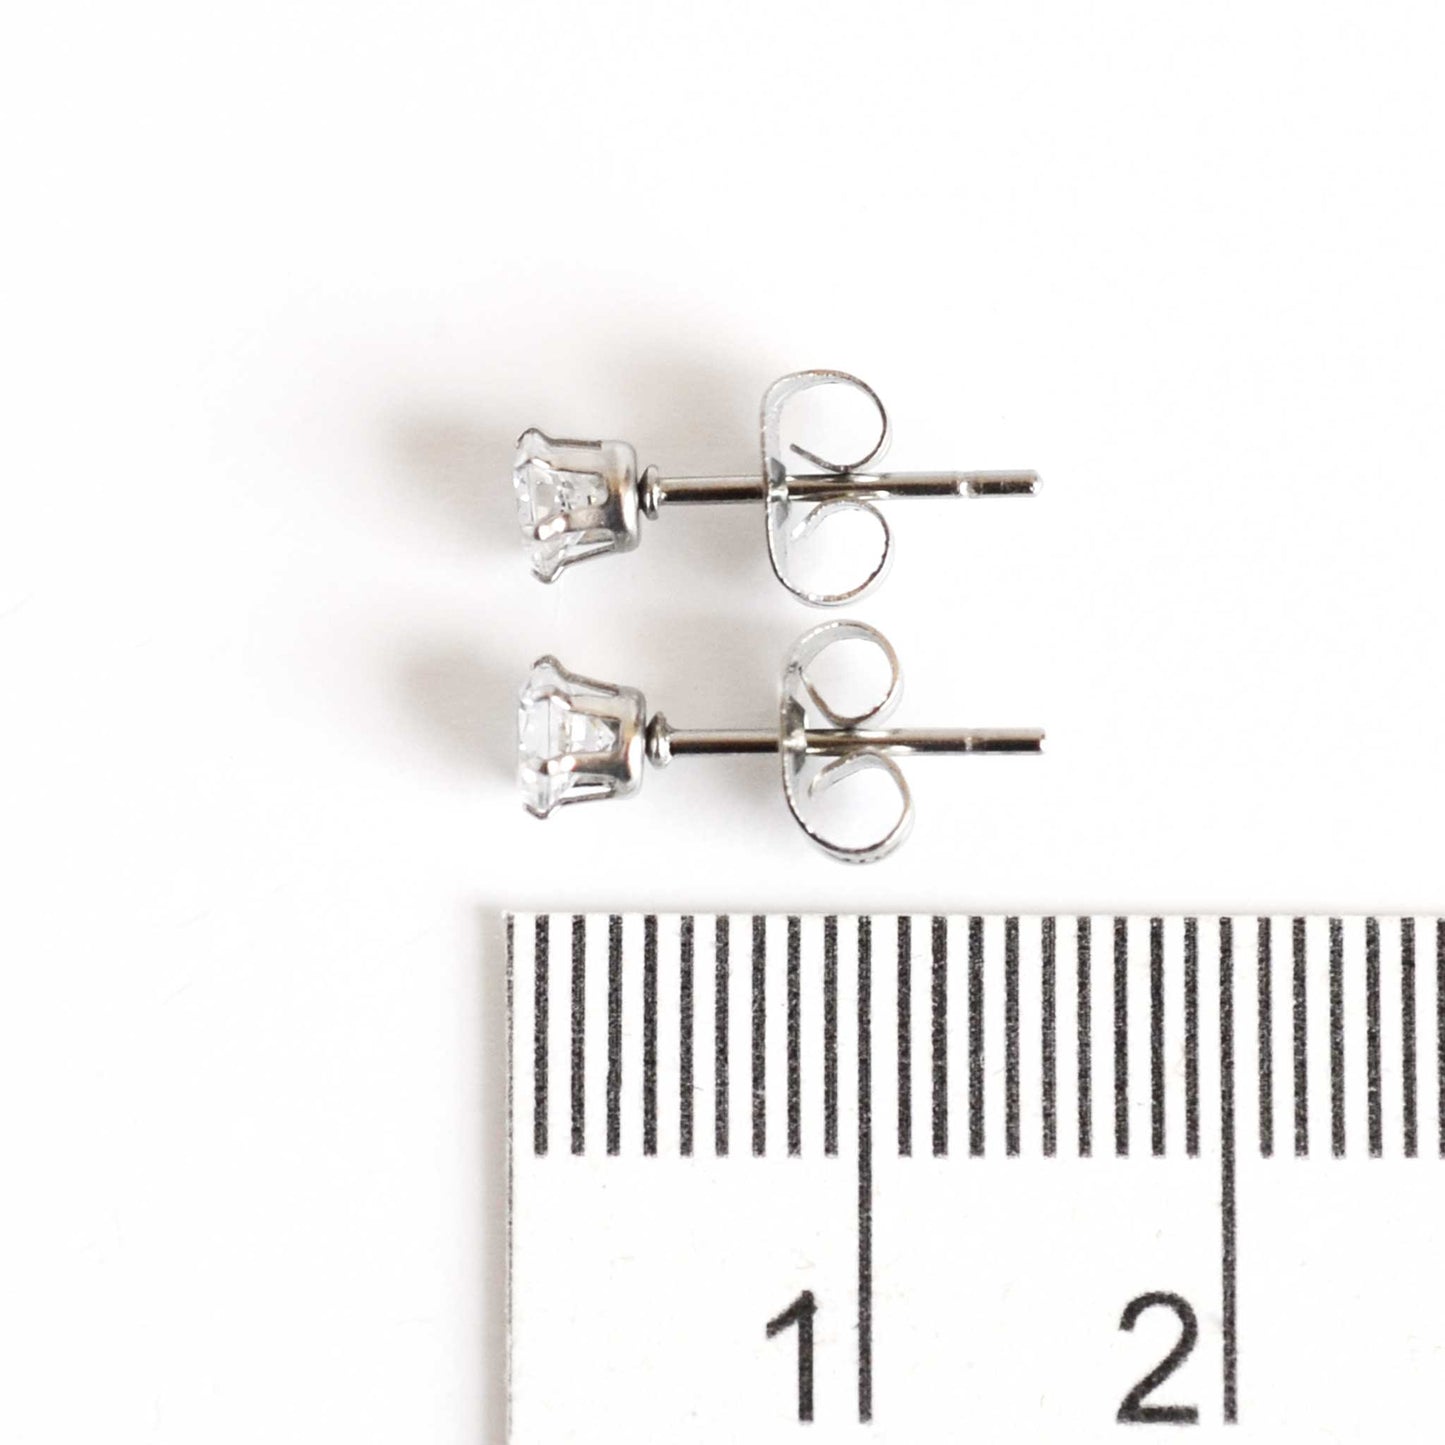 4mm Cubic Zirconia stud earrings next to ruler